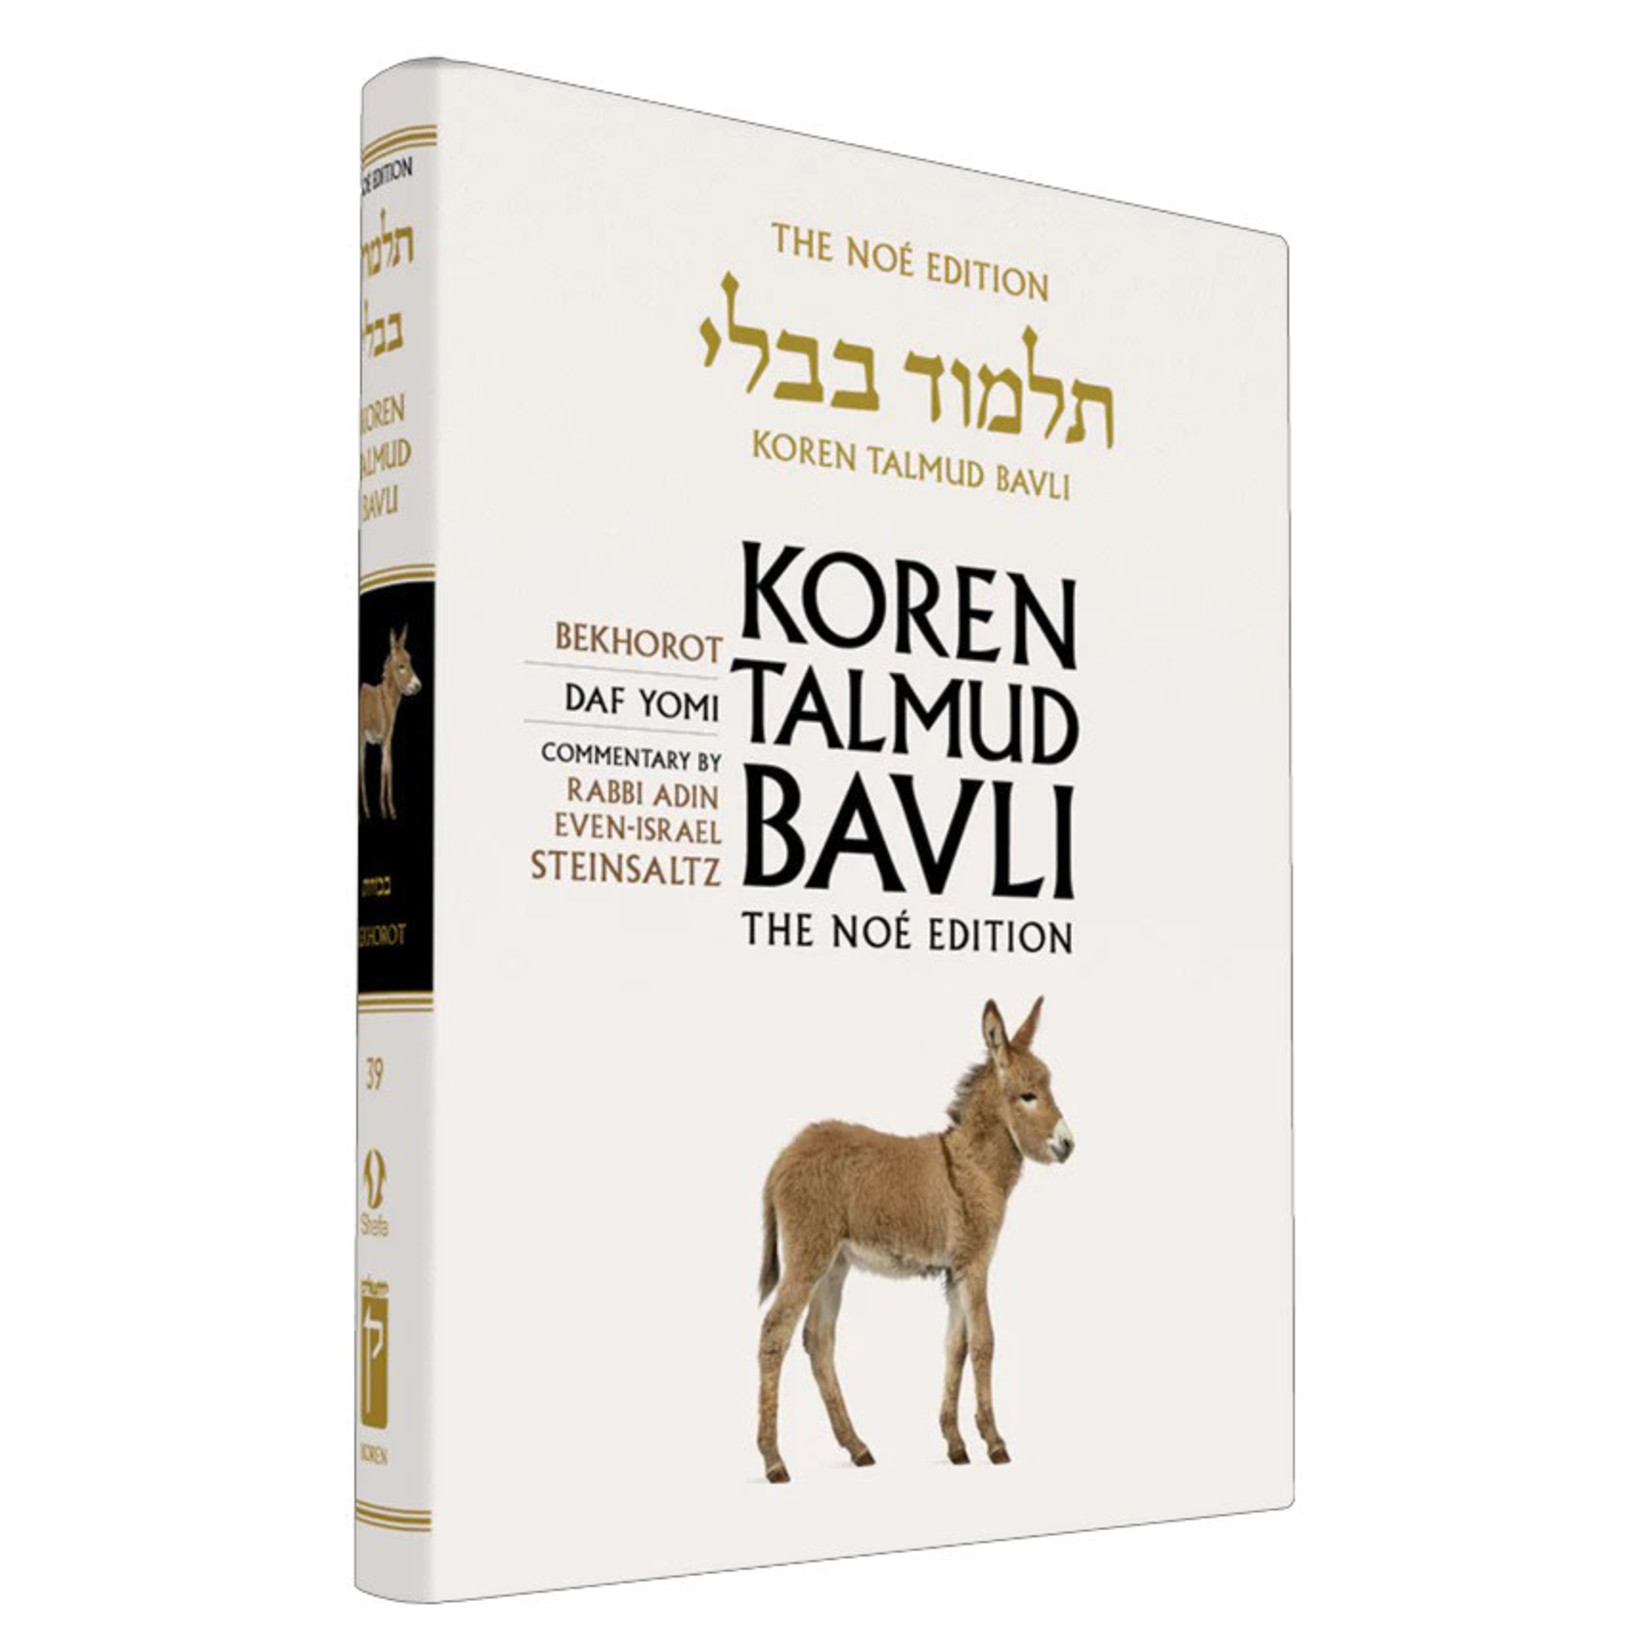 Bekhorot - Koren Talmud Bavli Noé Edition Daf Yomi Size - Volume 39